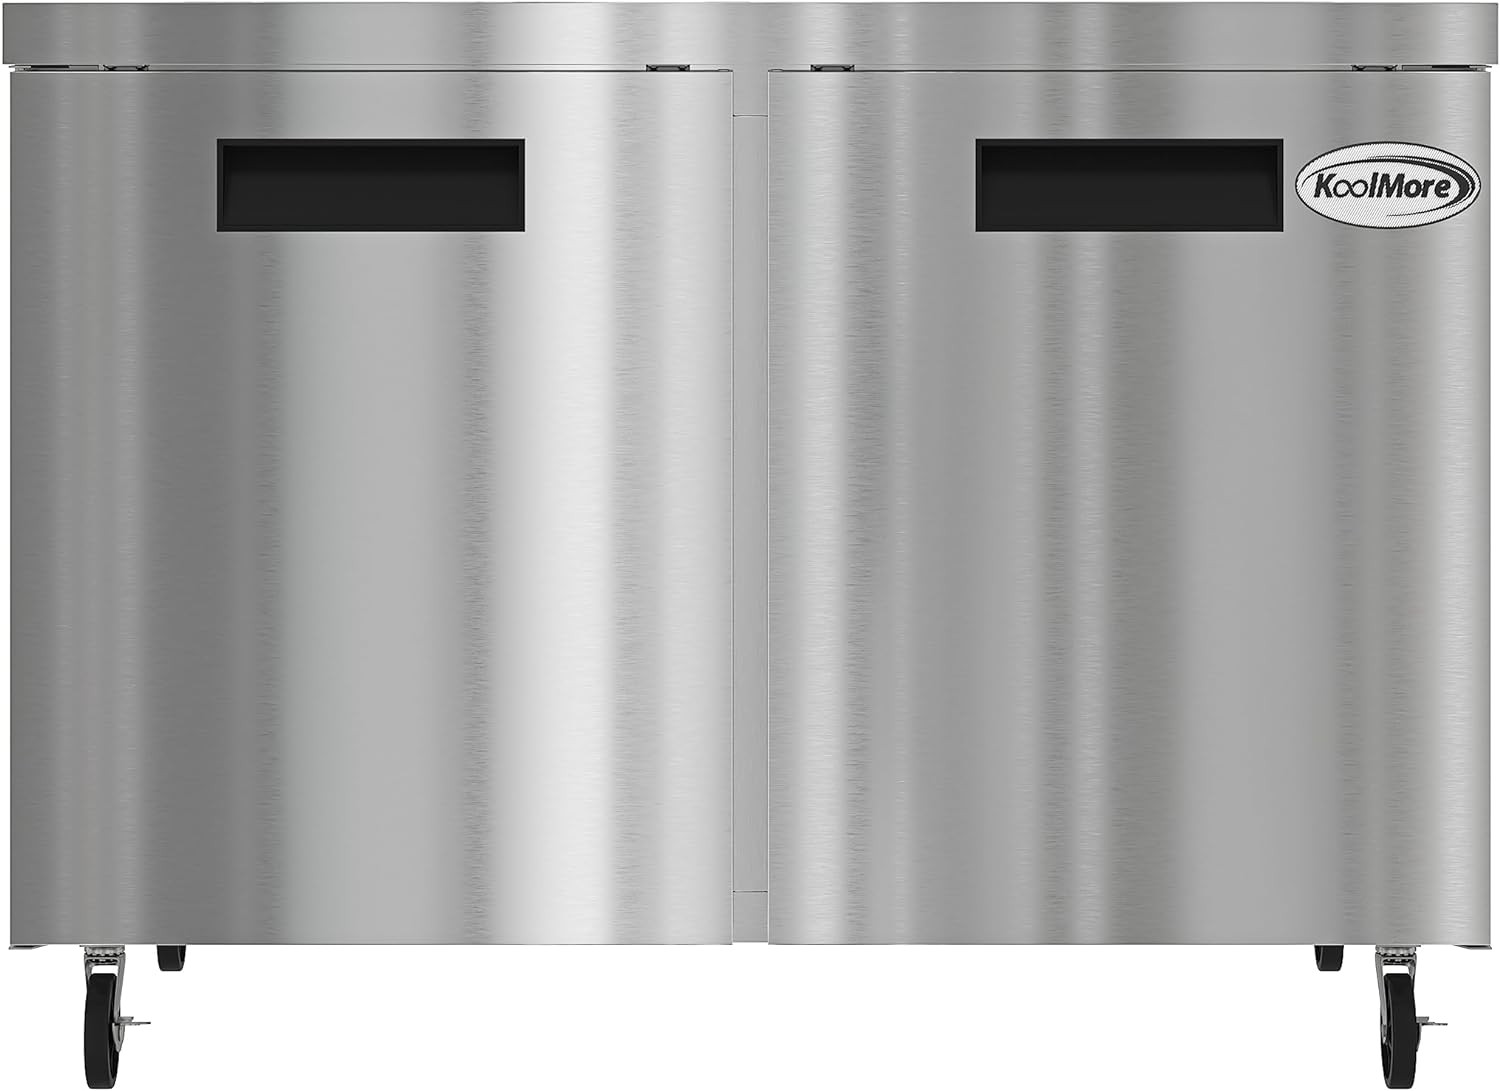 Koolmore KM-UCR-2DSS Two Door Stainless Steel Undercounter Refrigerator 48"